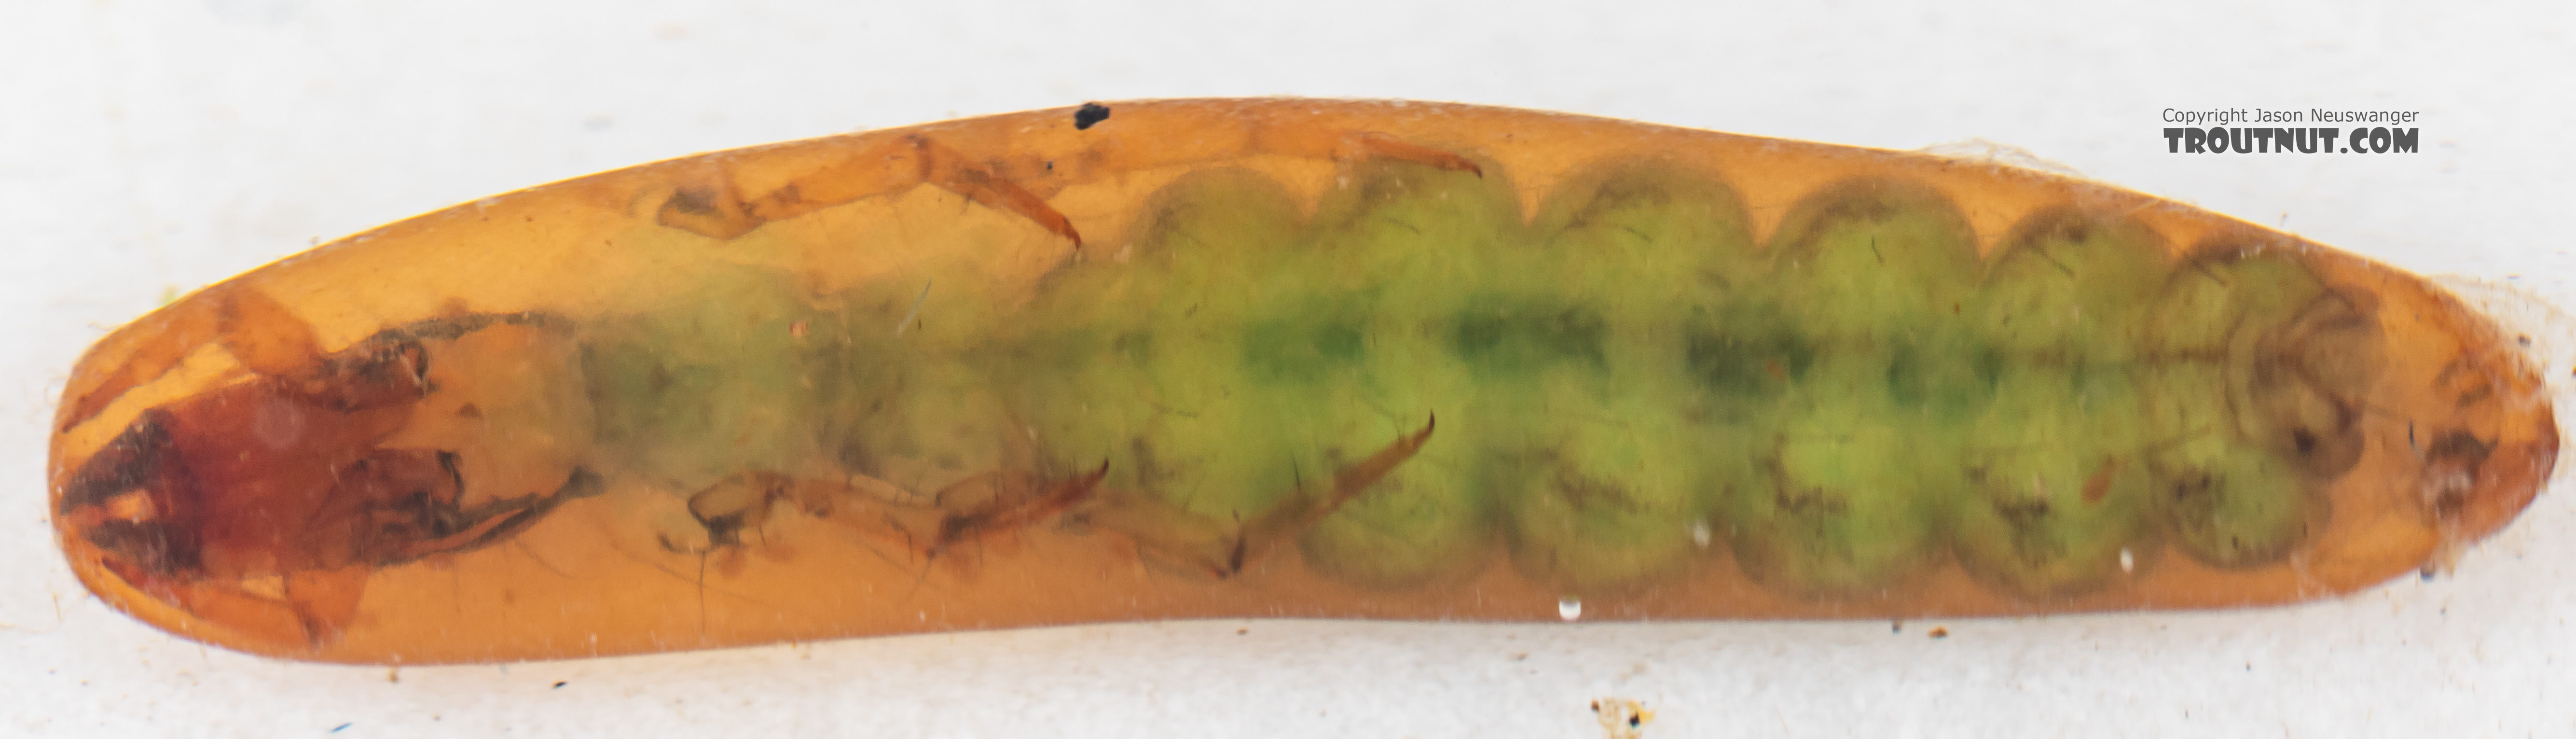 Rhyacophila (Green Sedges) Caddisfly Pupa from Mystery Creek #199 in Washington